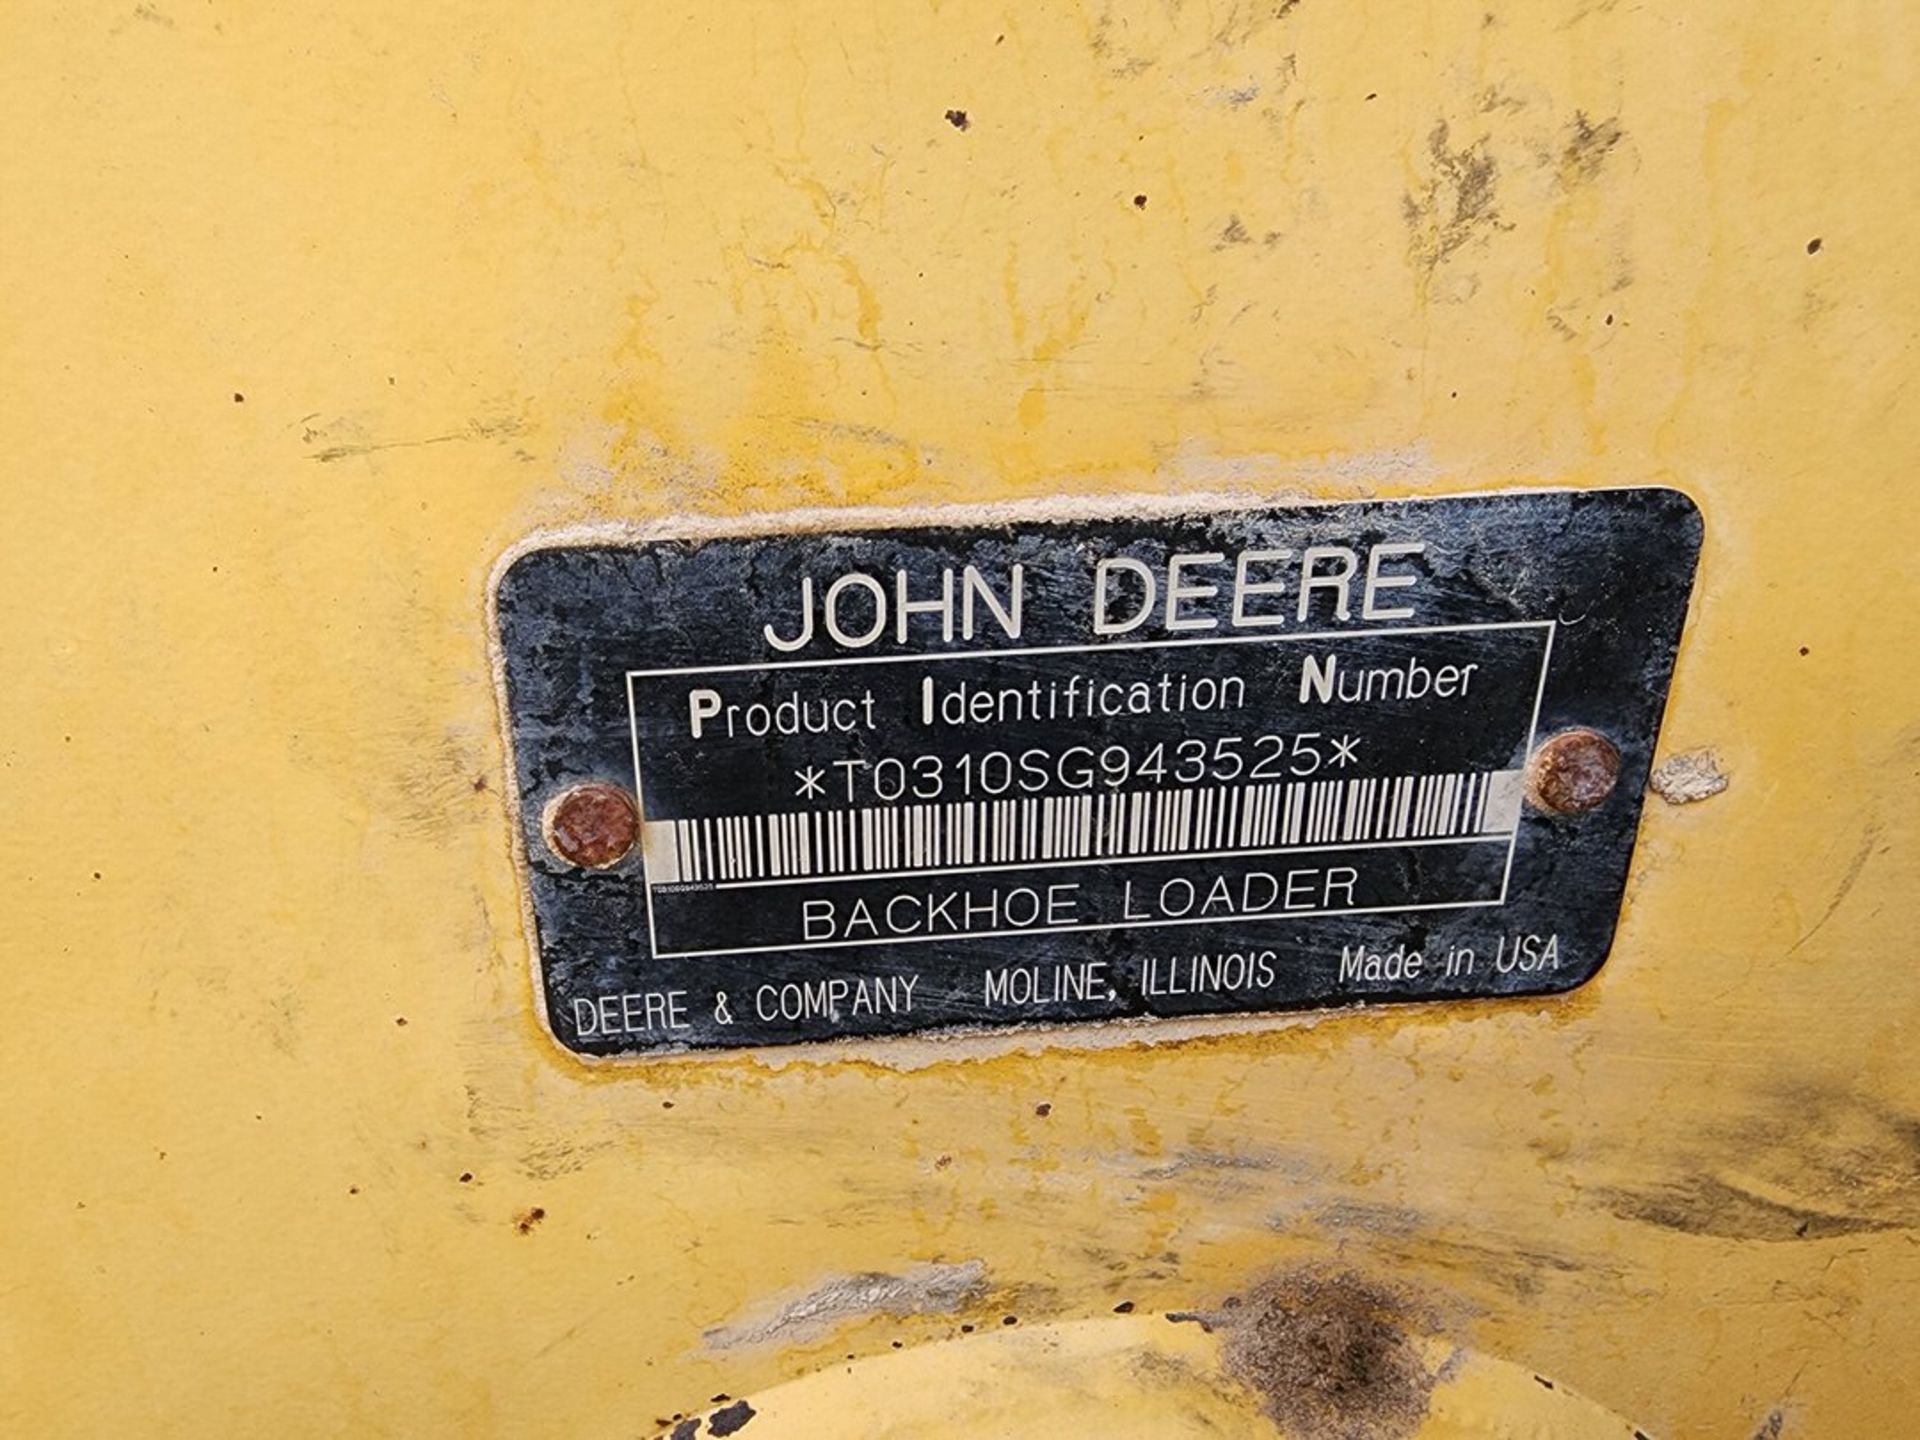 2005 John Deere 310SG Backhoe Loader W/ 1.25 cu/yd Bucket; Pin: T0310SG943525; Hrs: 1,050 - Image 22 of 24